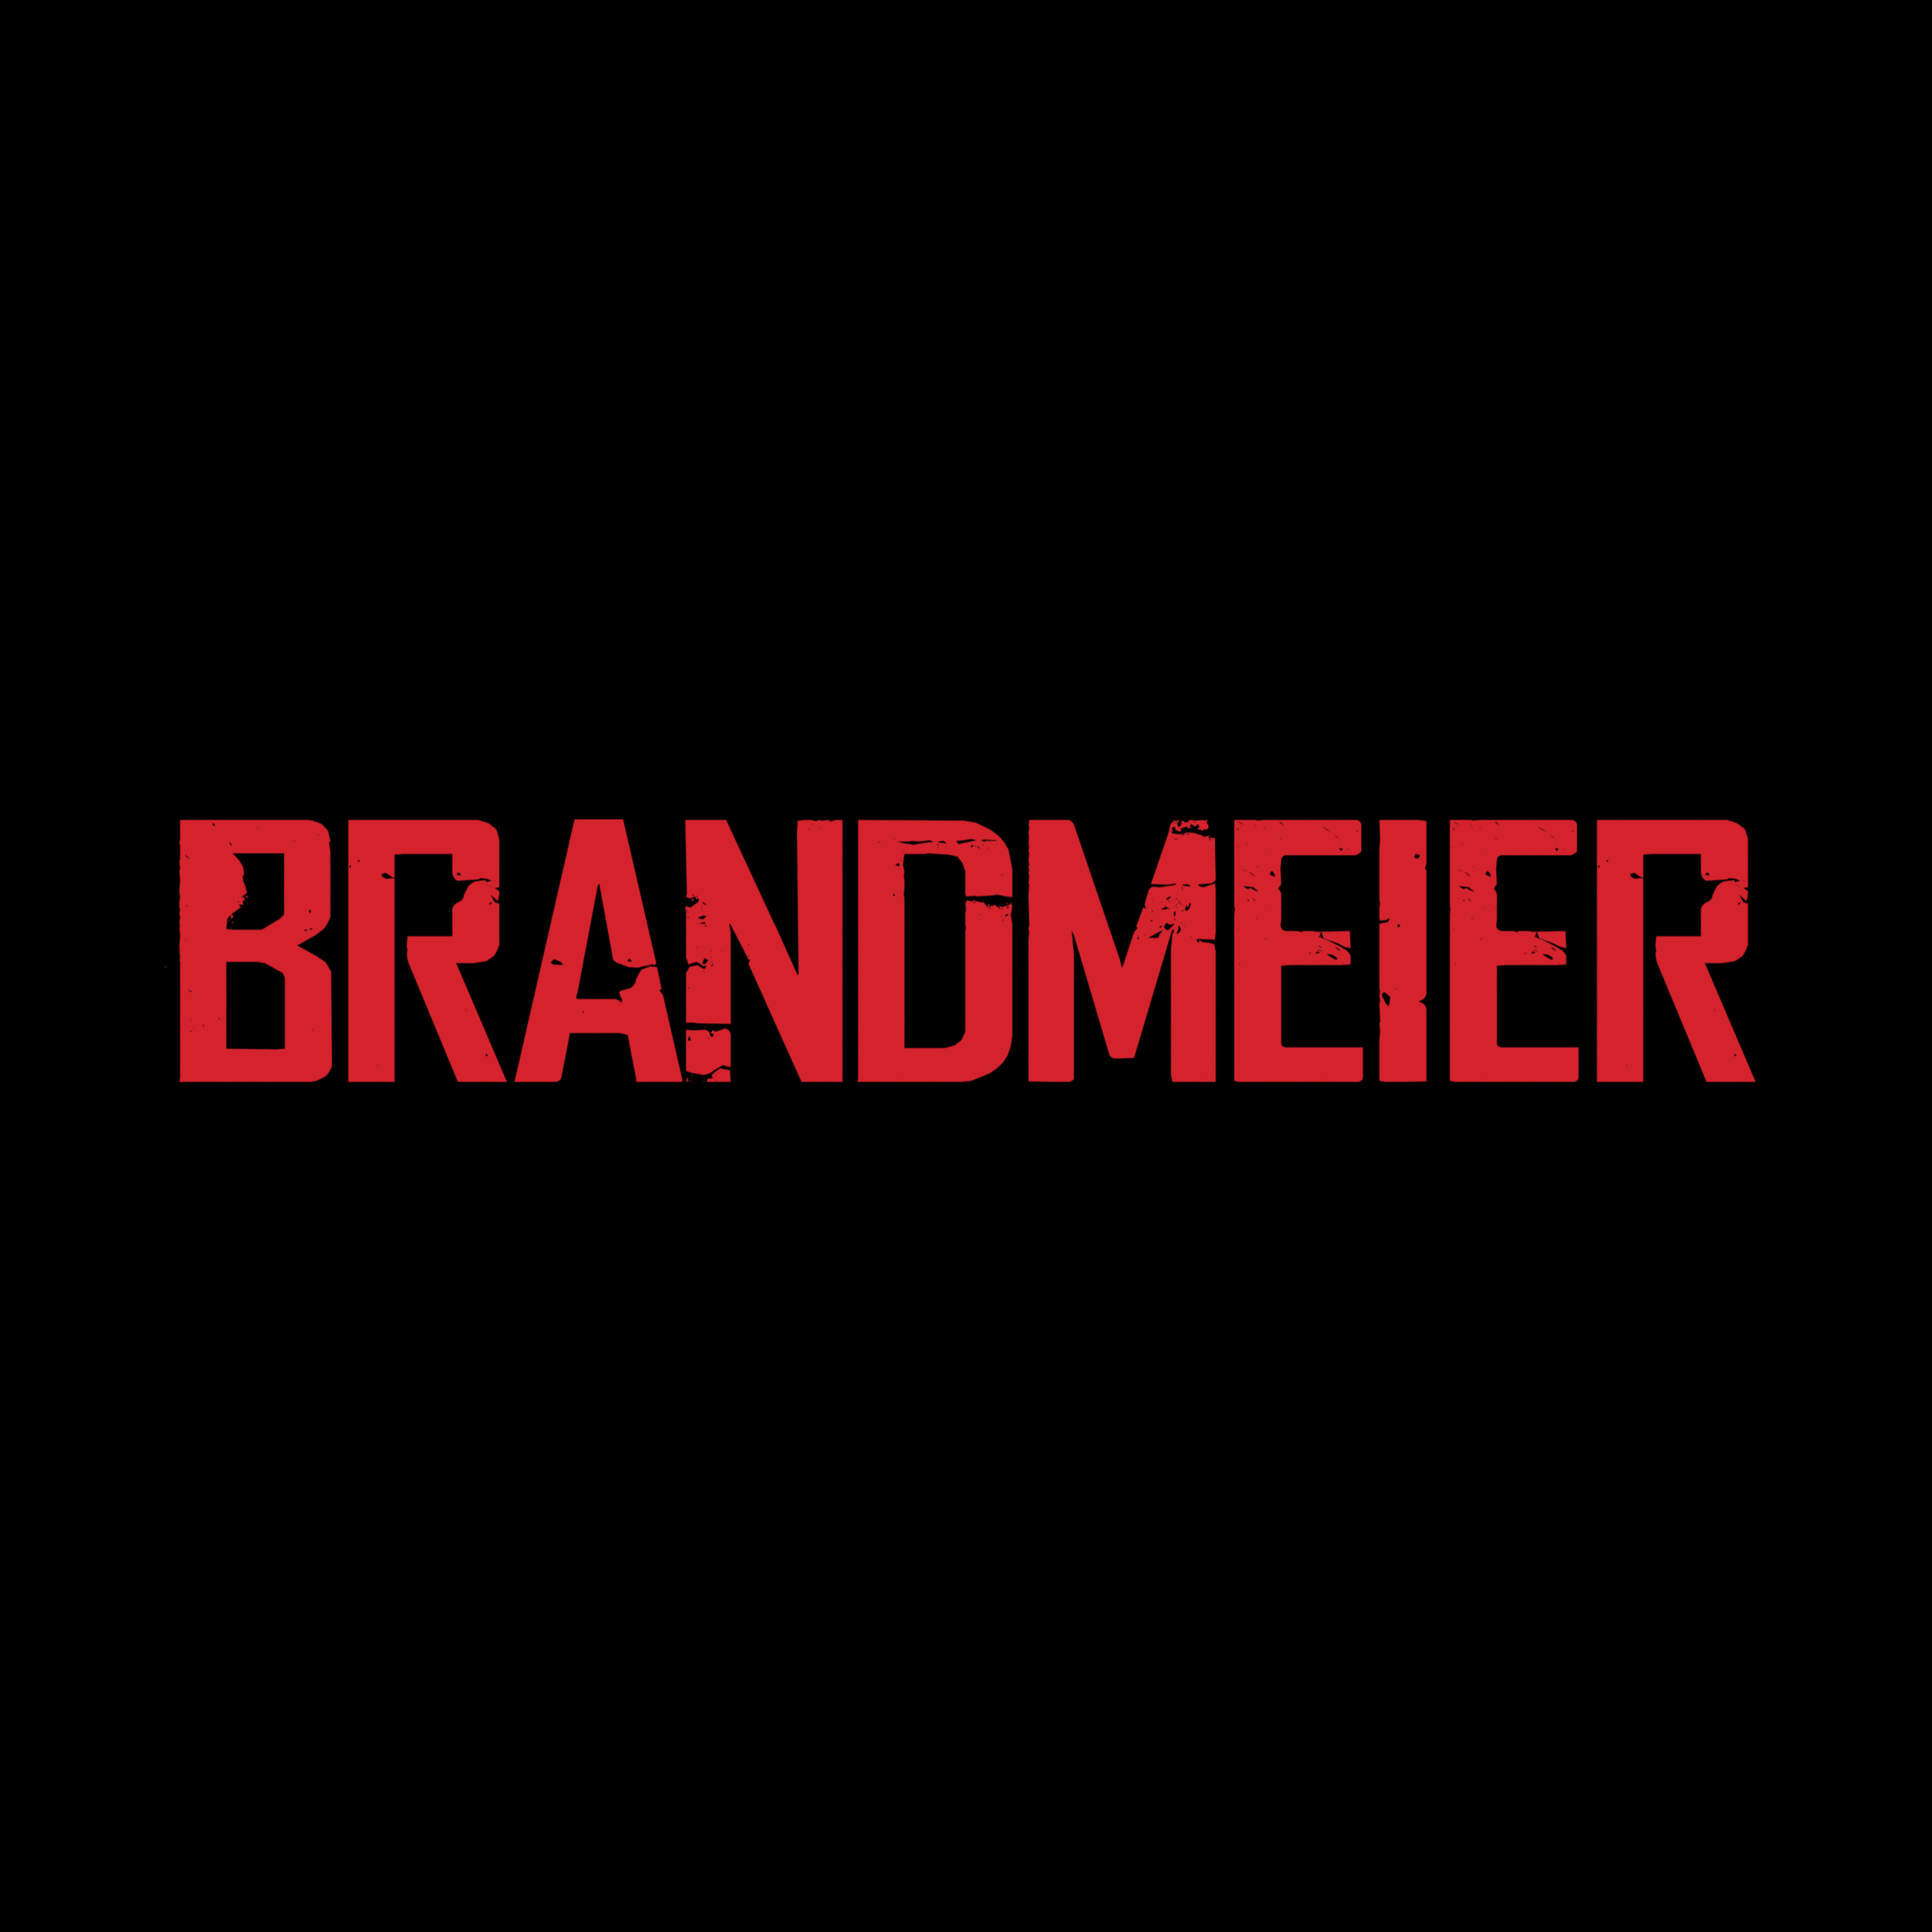 The Jonathon Brandmeier Showcast